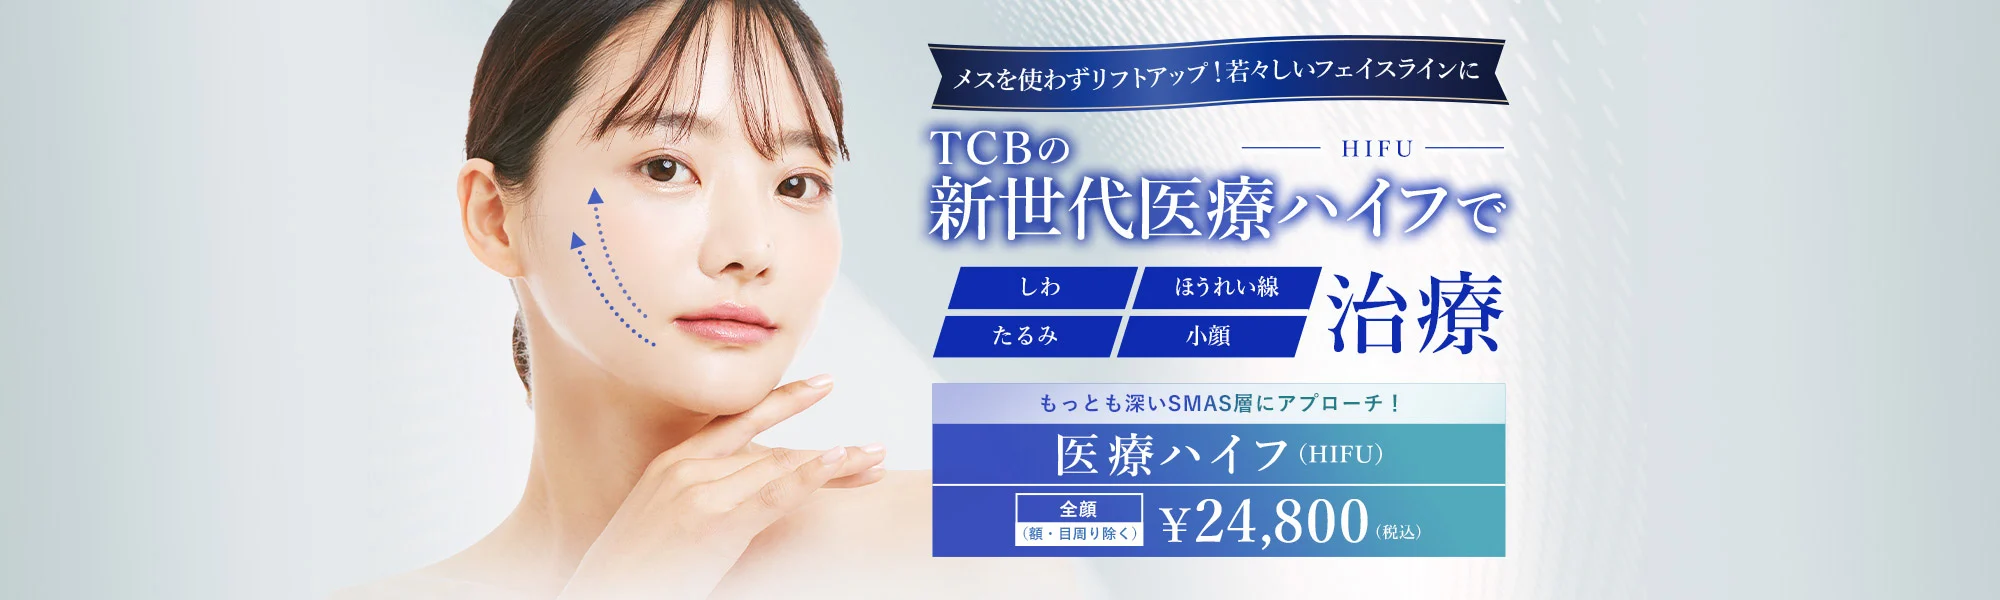 TCB 東京中央美容外科 千葉院｜割引制度でよりお得に施術を受けられる